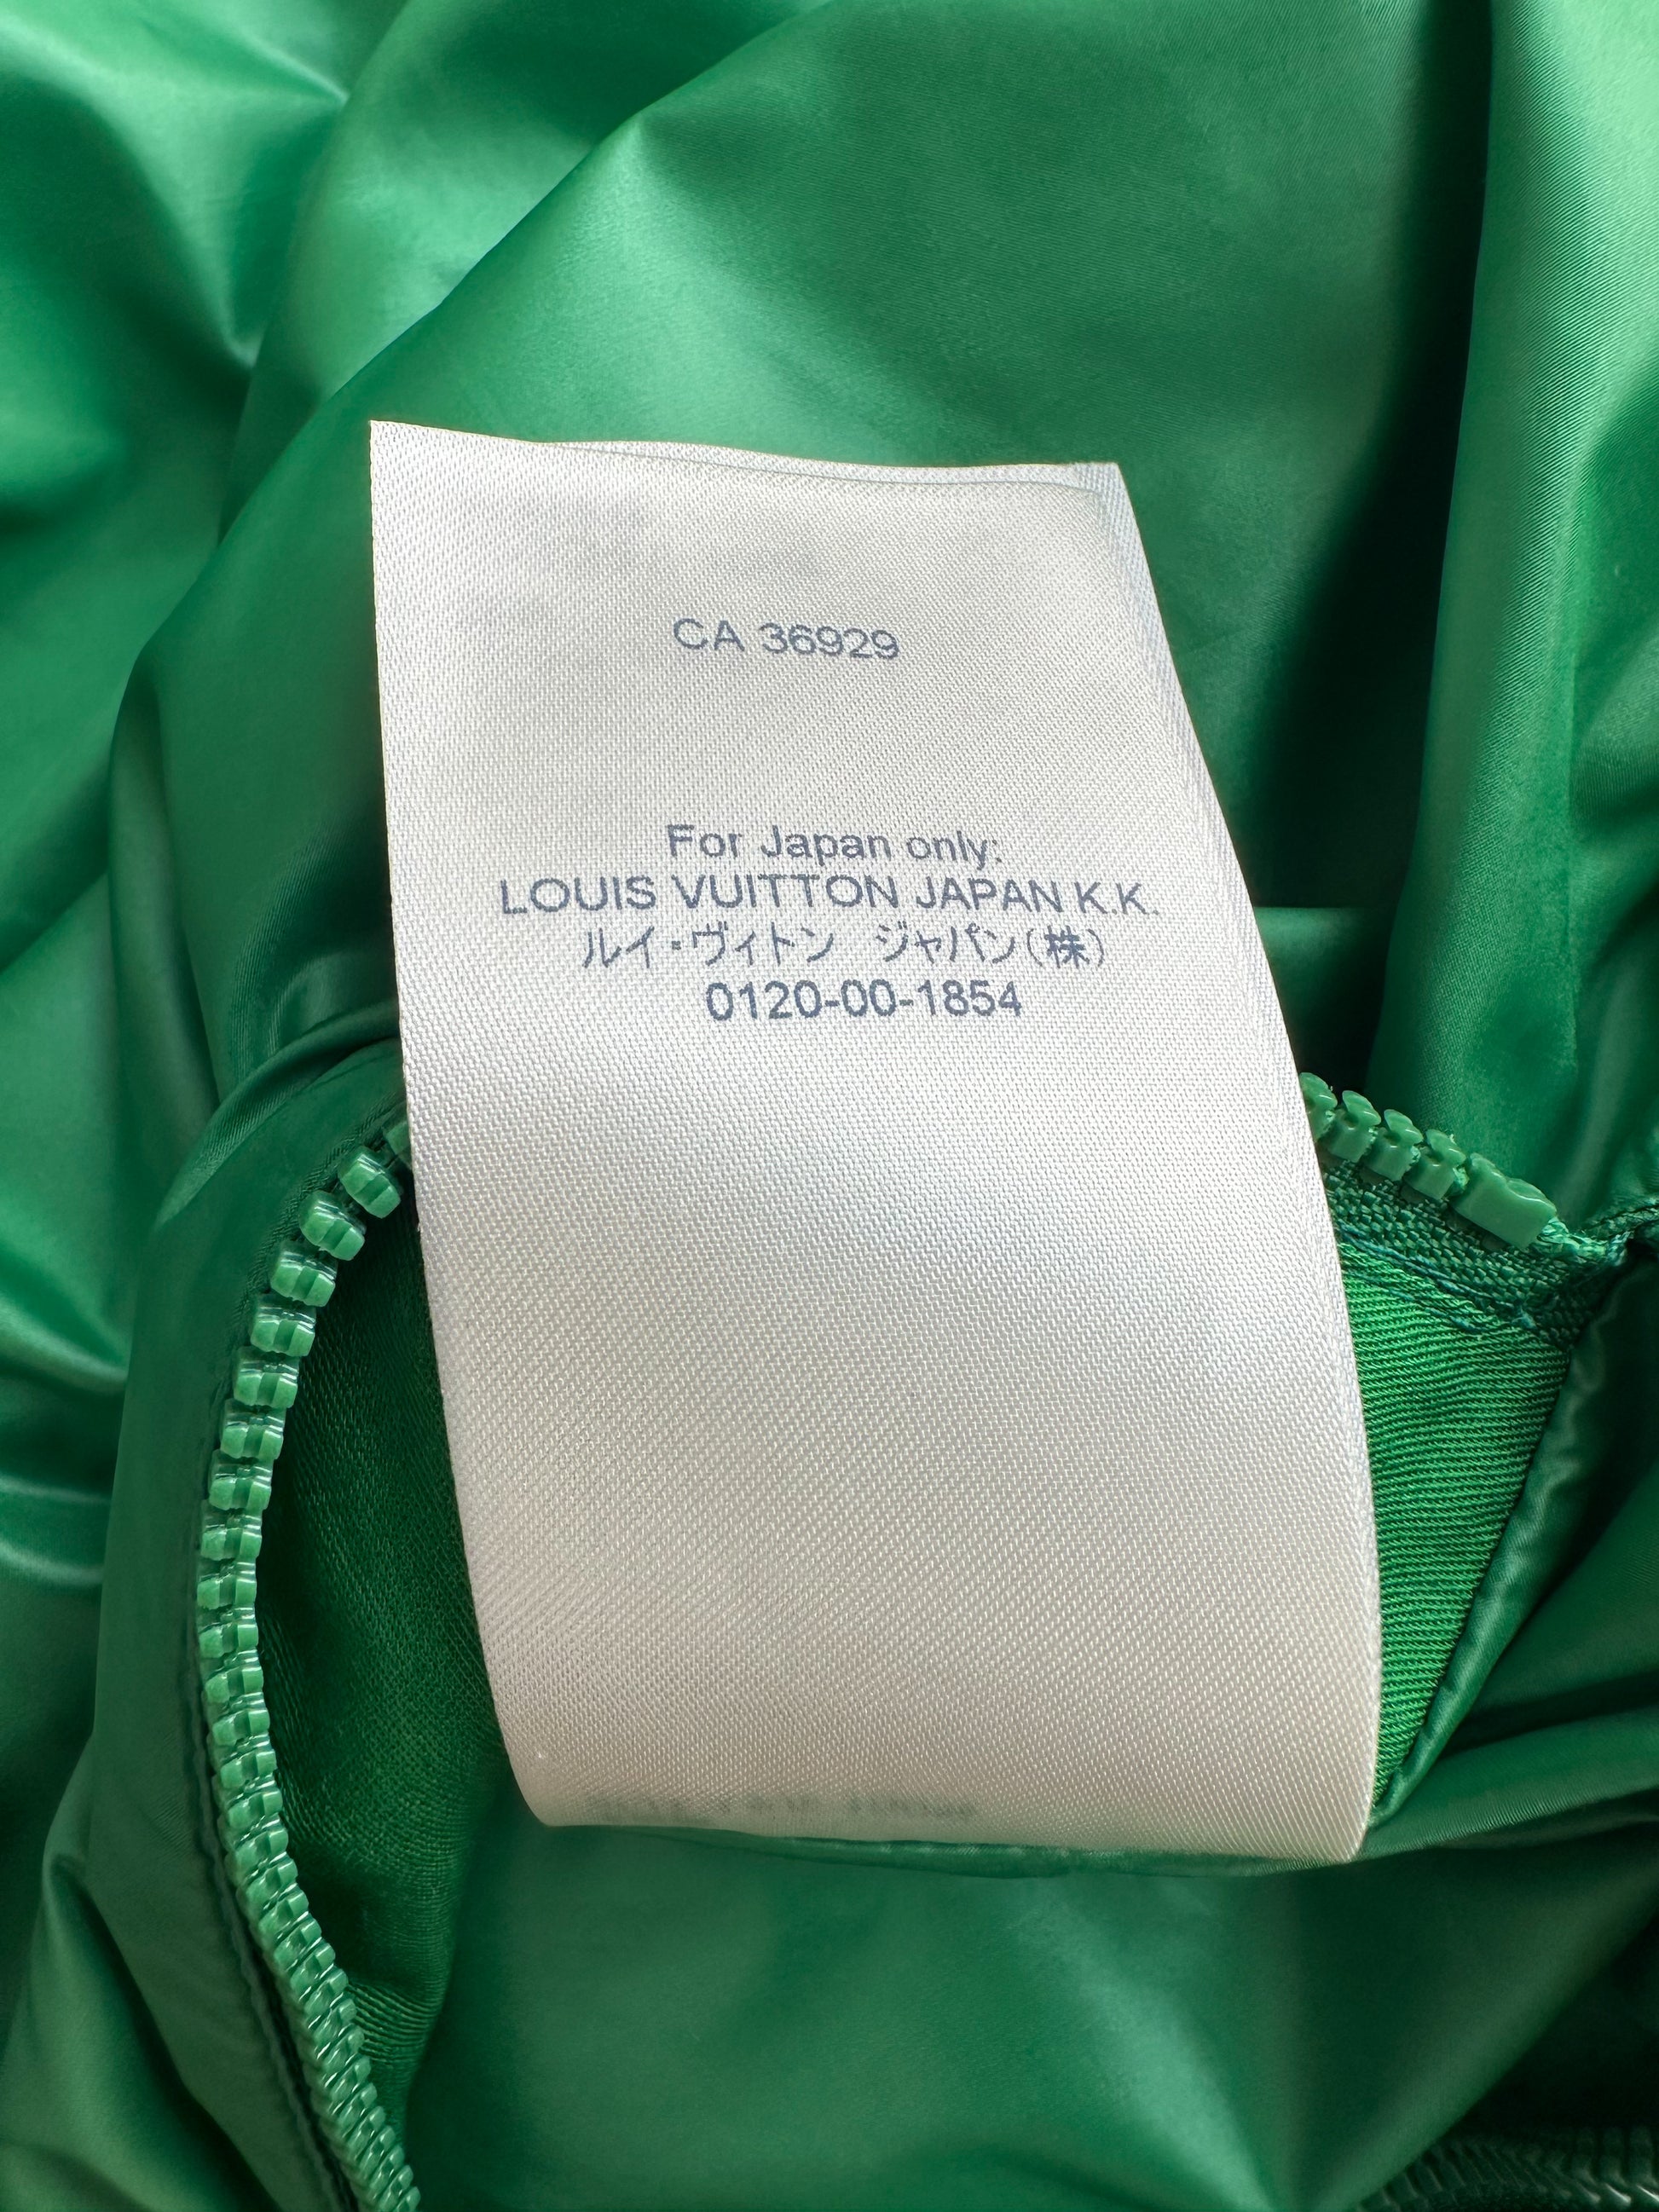 Louis Vuitton Green Camouflage/Monogram Nylon Zip Jacket with Hood Size 46  Mens